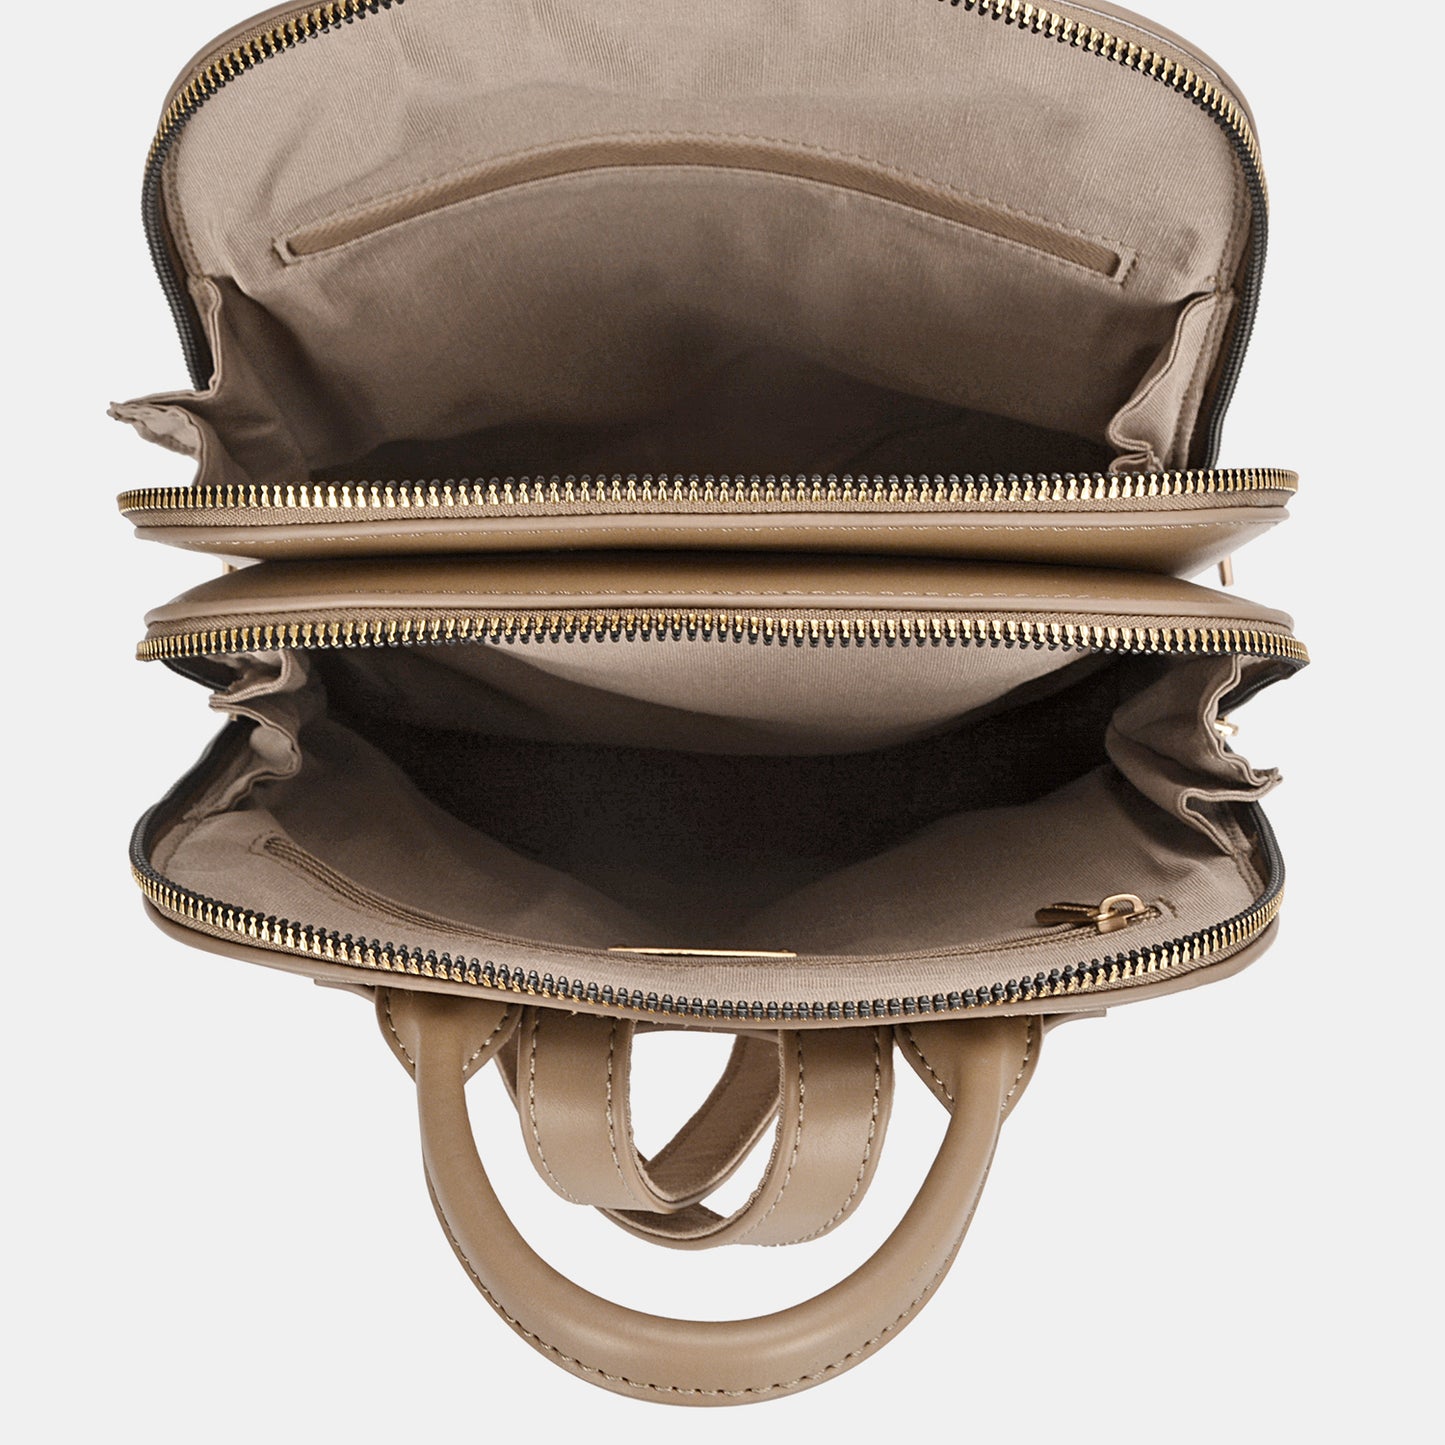 David Jones PU Leather Adjustable Straps Backpack Bag - House of Binx 